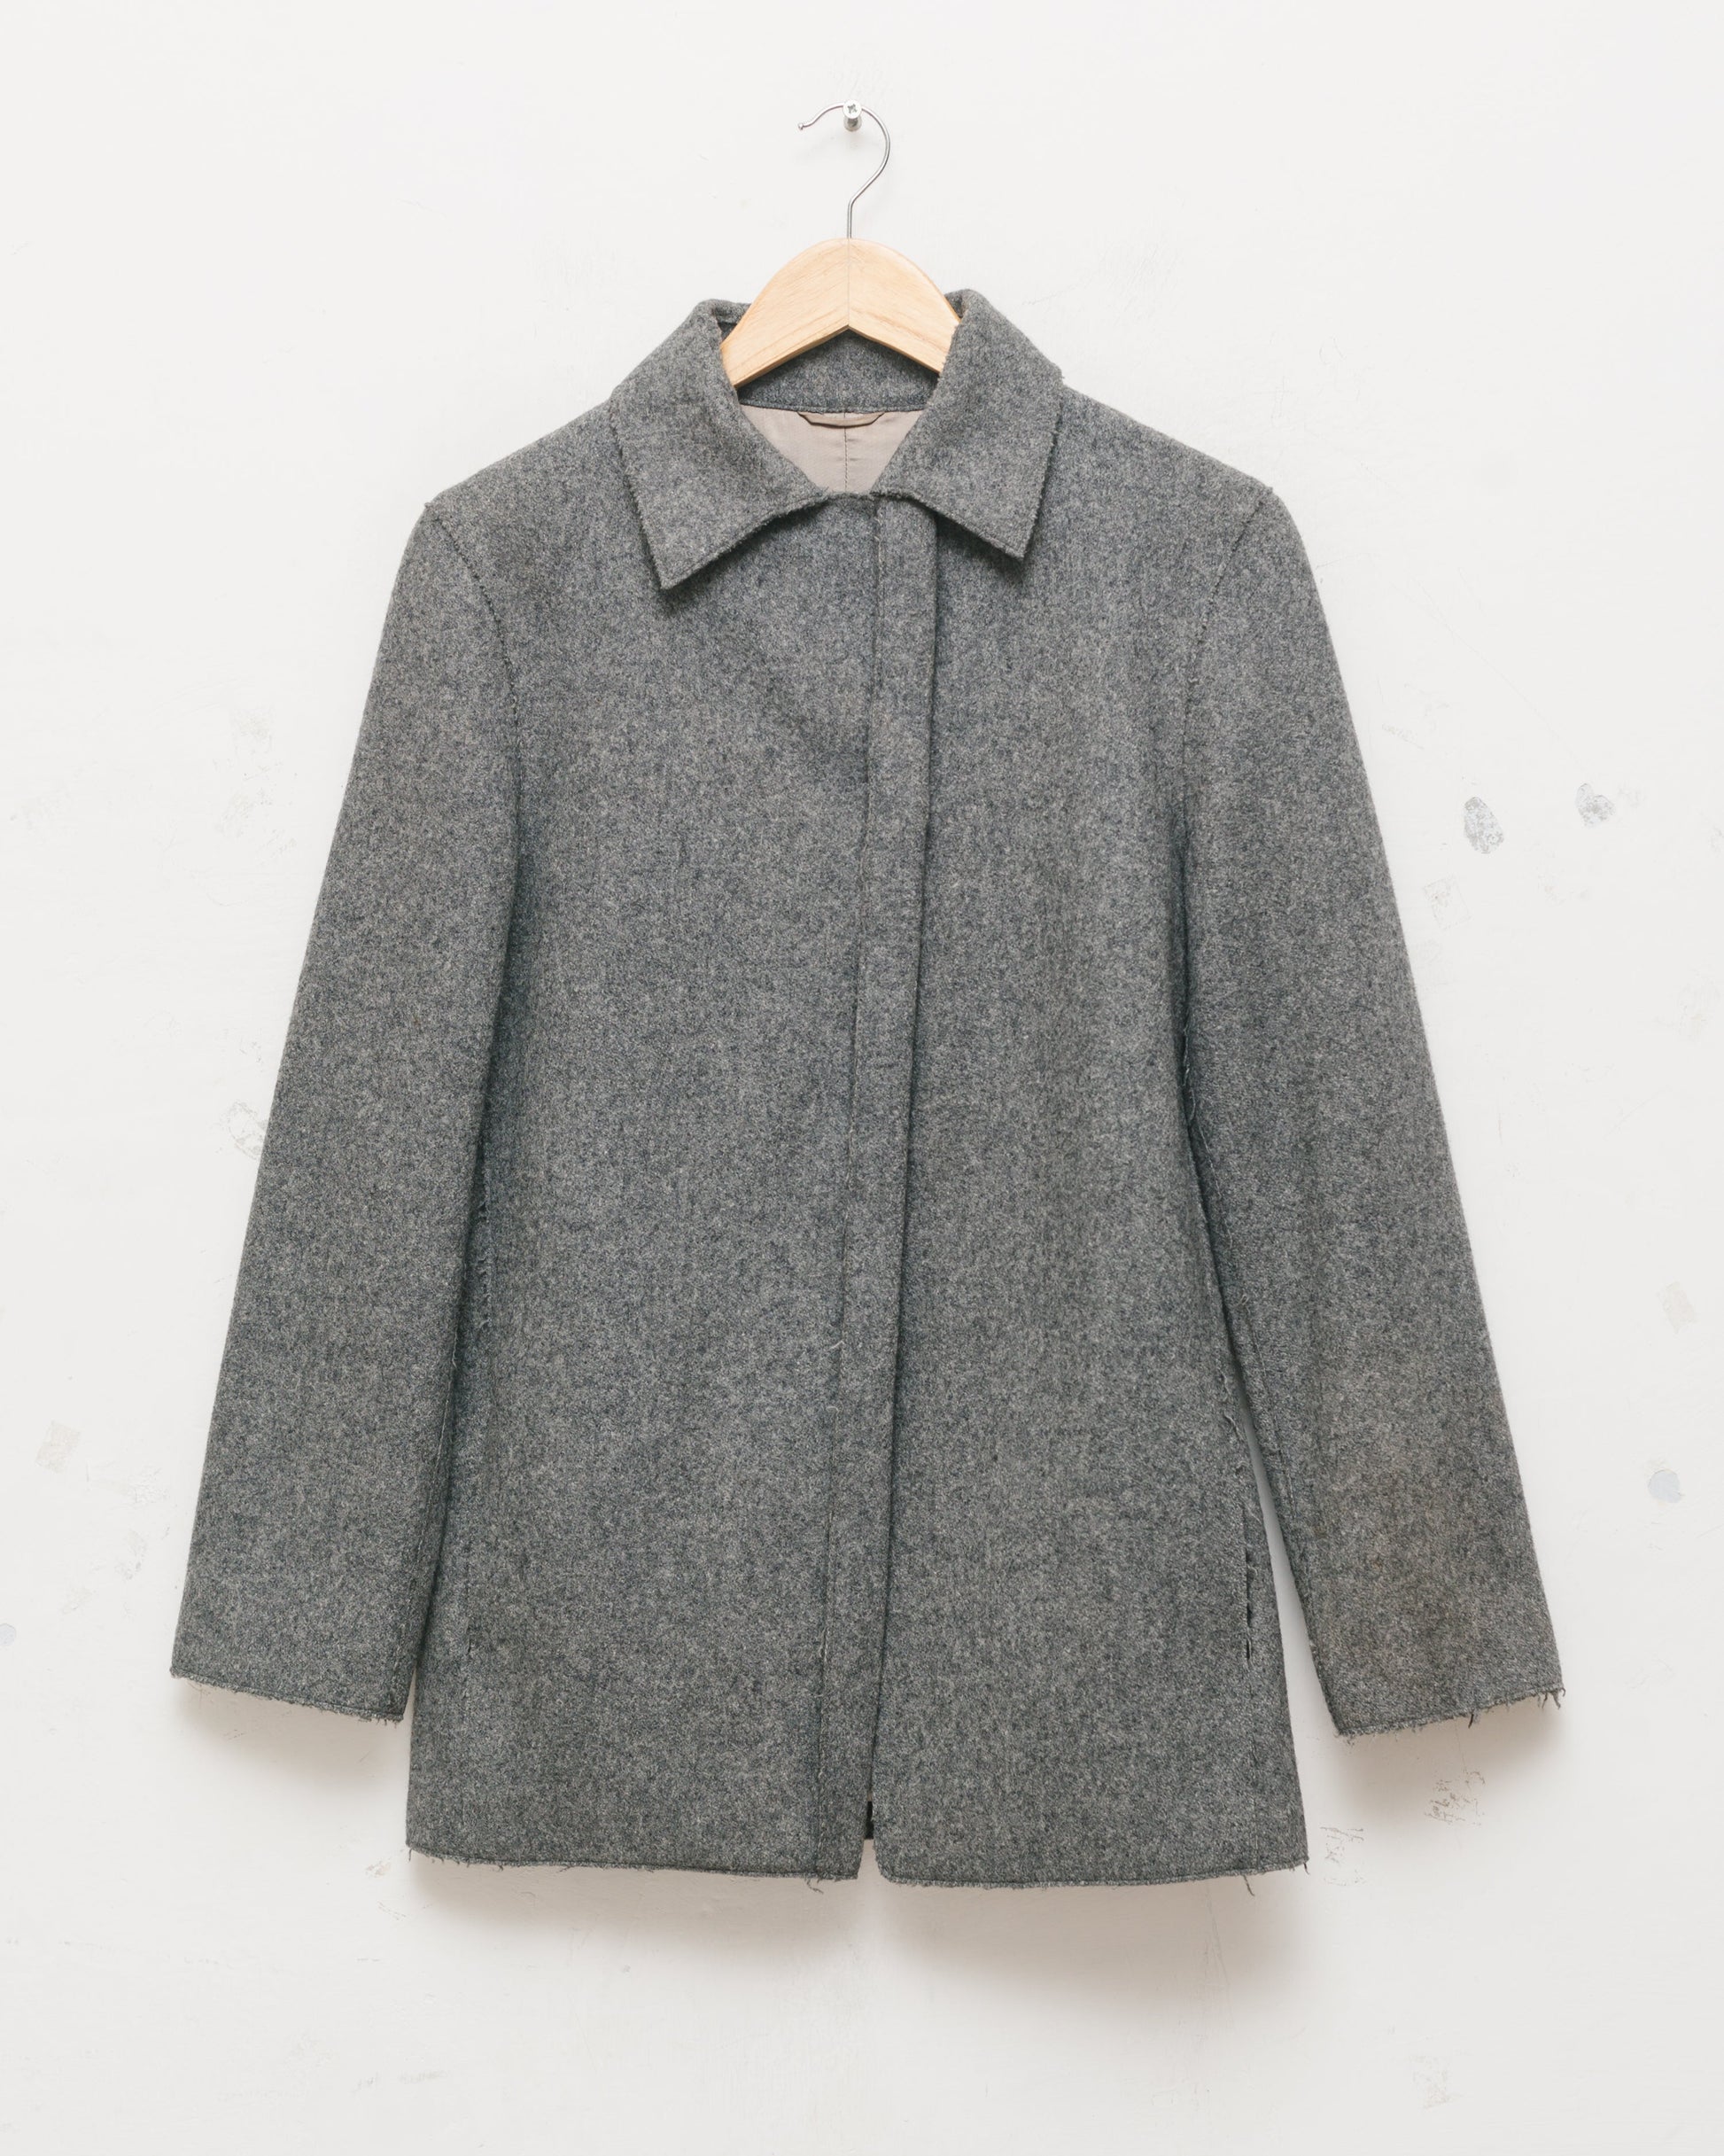 Jil sander short wool coat